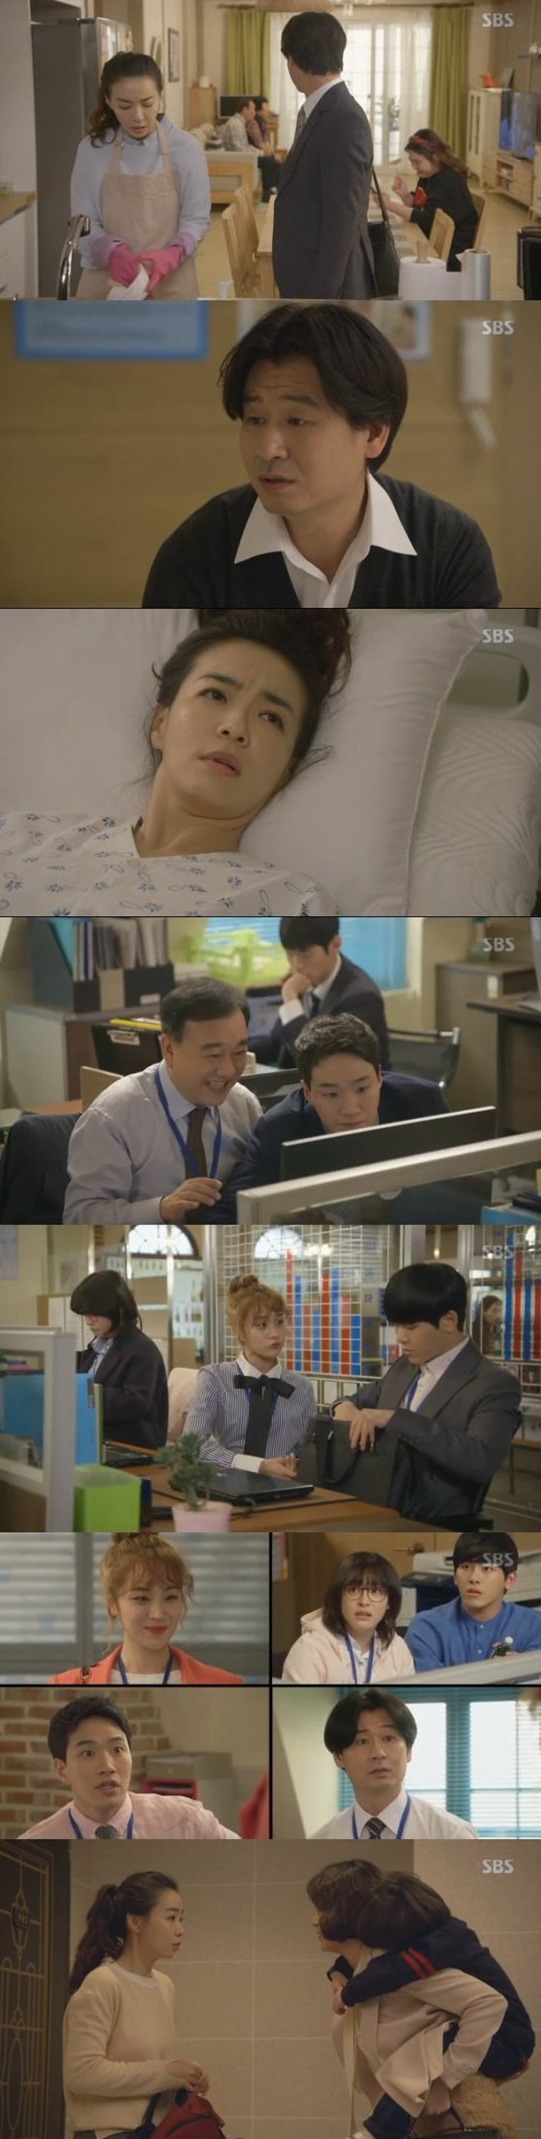 episode 11 captures for the Korean drama 'Strong Family'